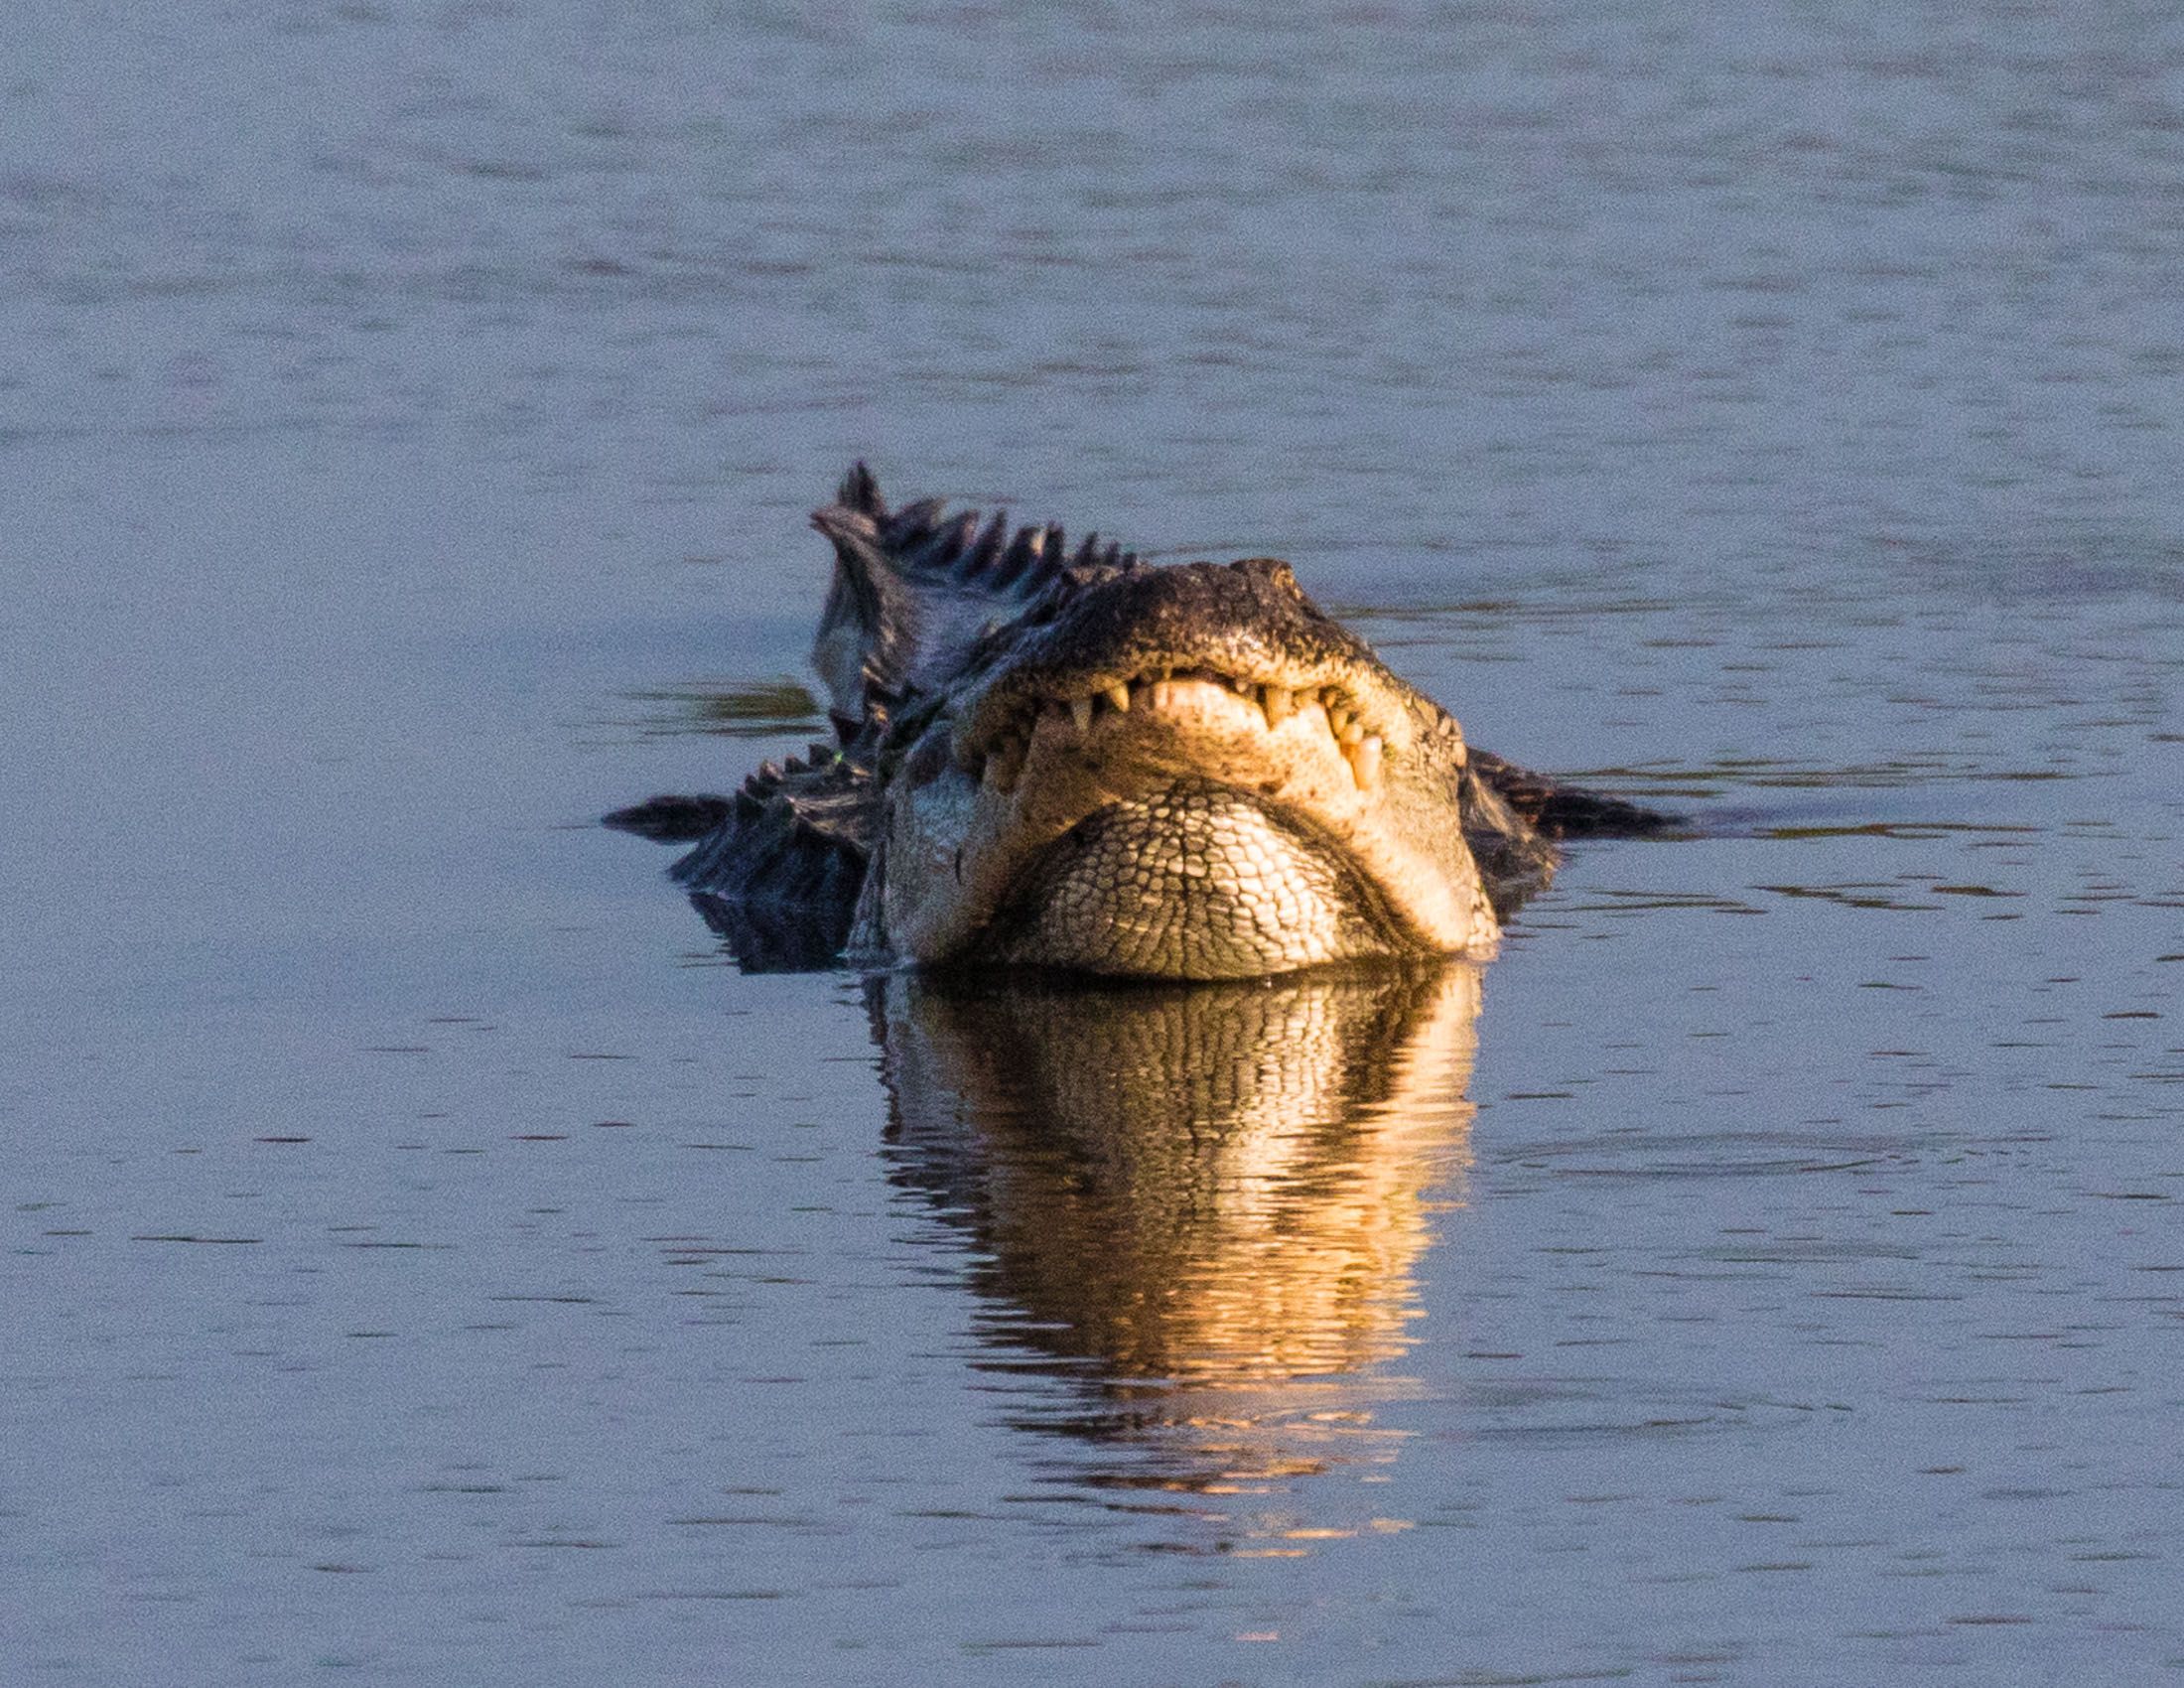 Alligators of Ace Basin, South Carolina-10.jpg